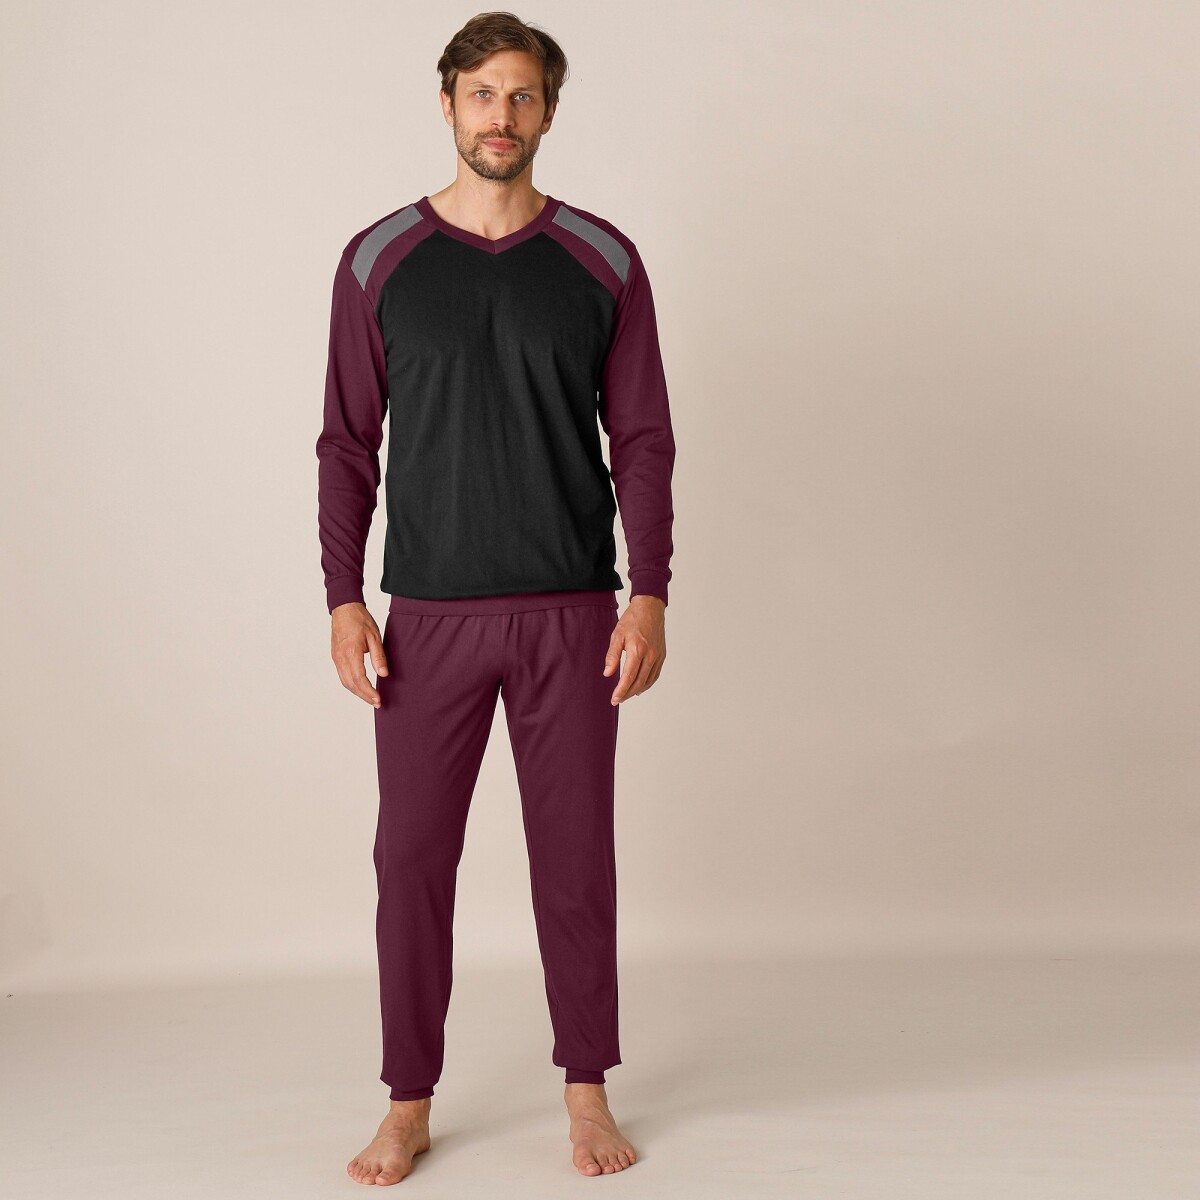 Blancheporte Sada 2 pyžam, trojbarevný design bordóšedá 7886 (S)